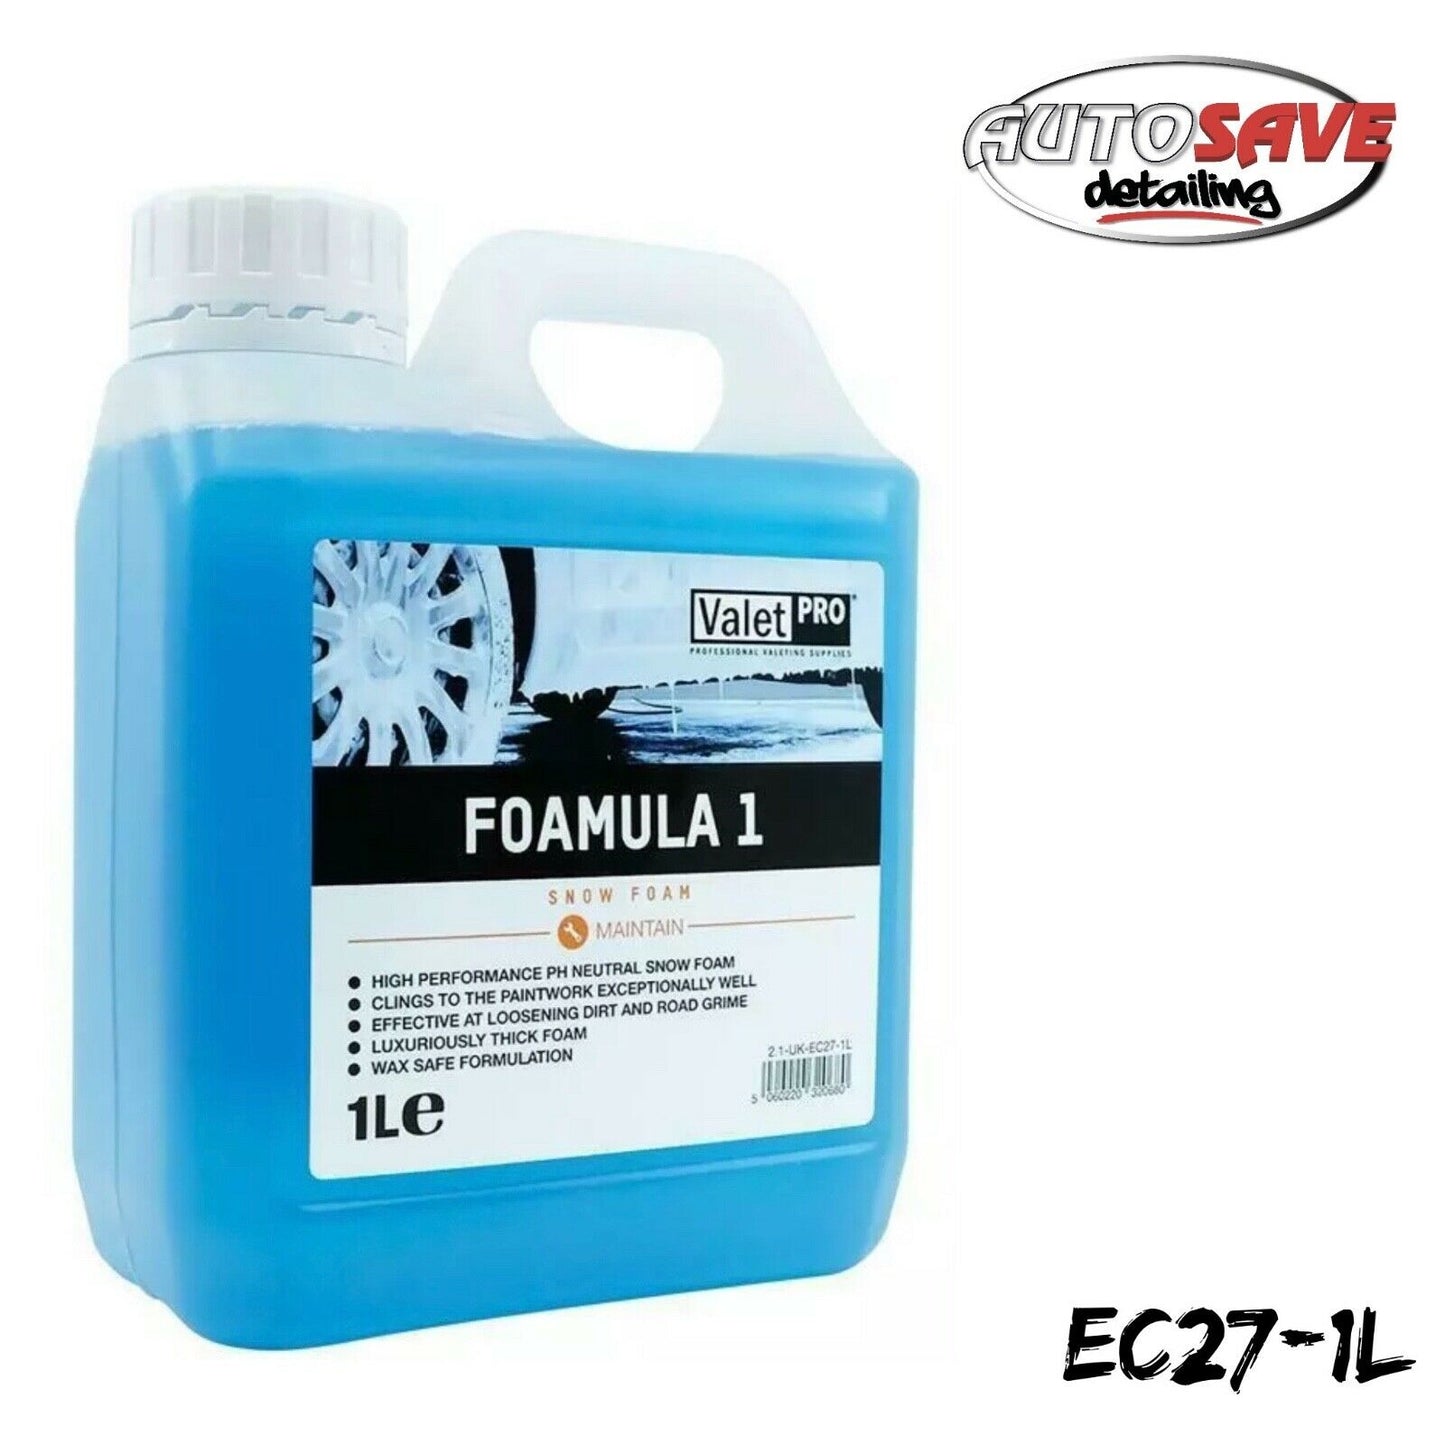 Valet Pro Foamula 1 Snow Foam, Valeting, Detailing pH Neutral Wax Safe